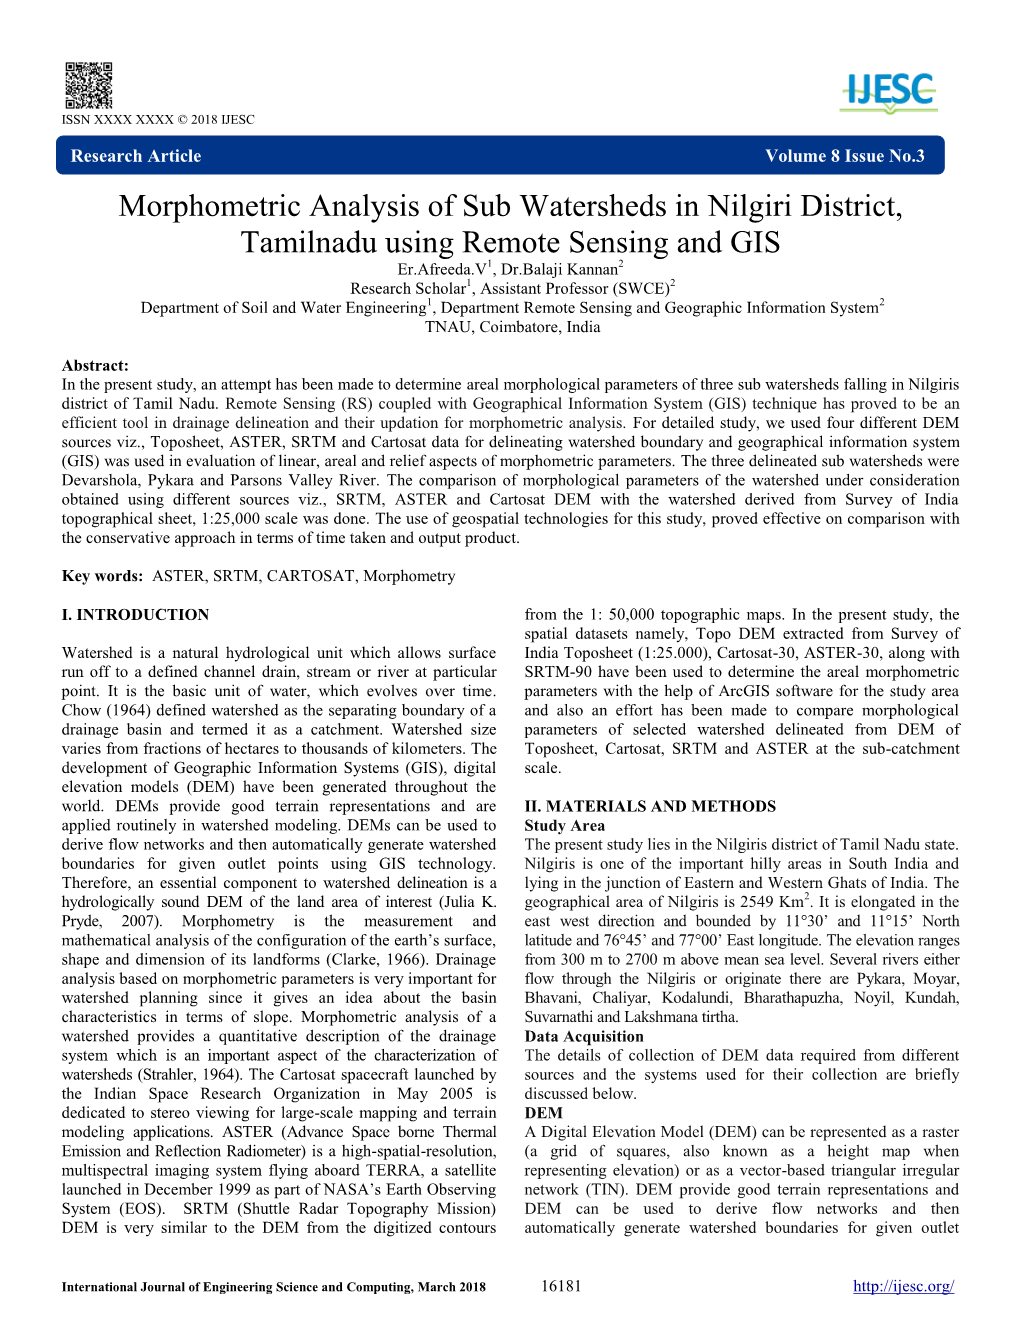 Morphometric Analysis of Sub Watersheds in Nilgiri District